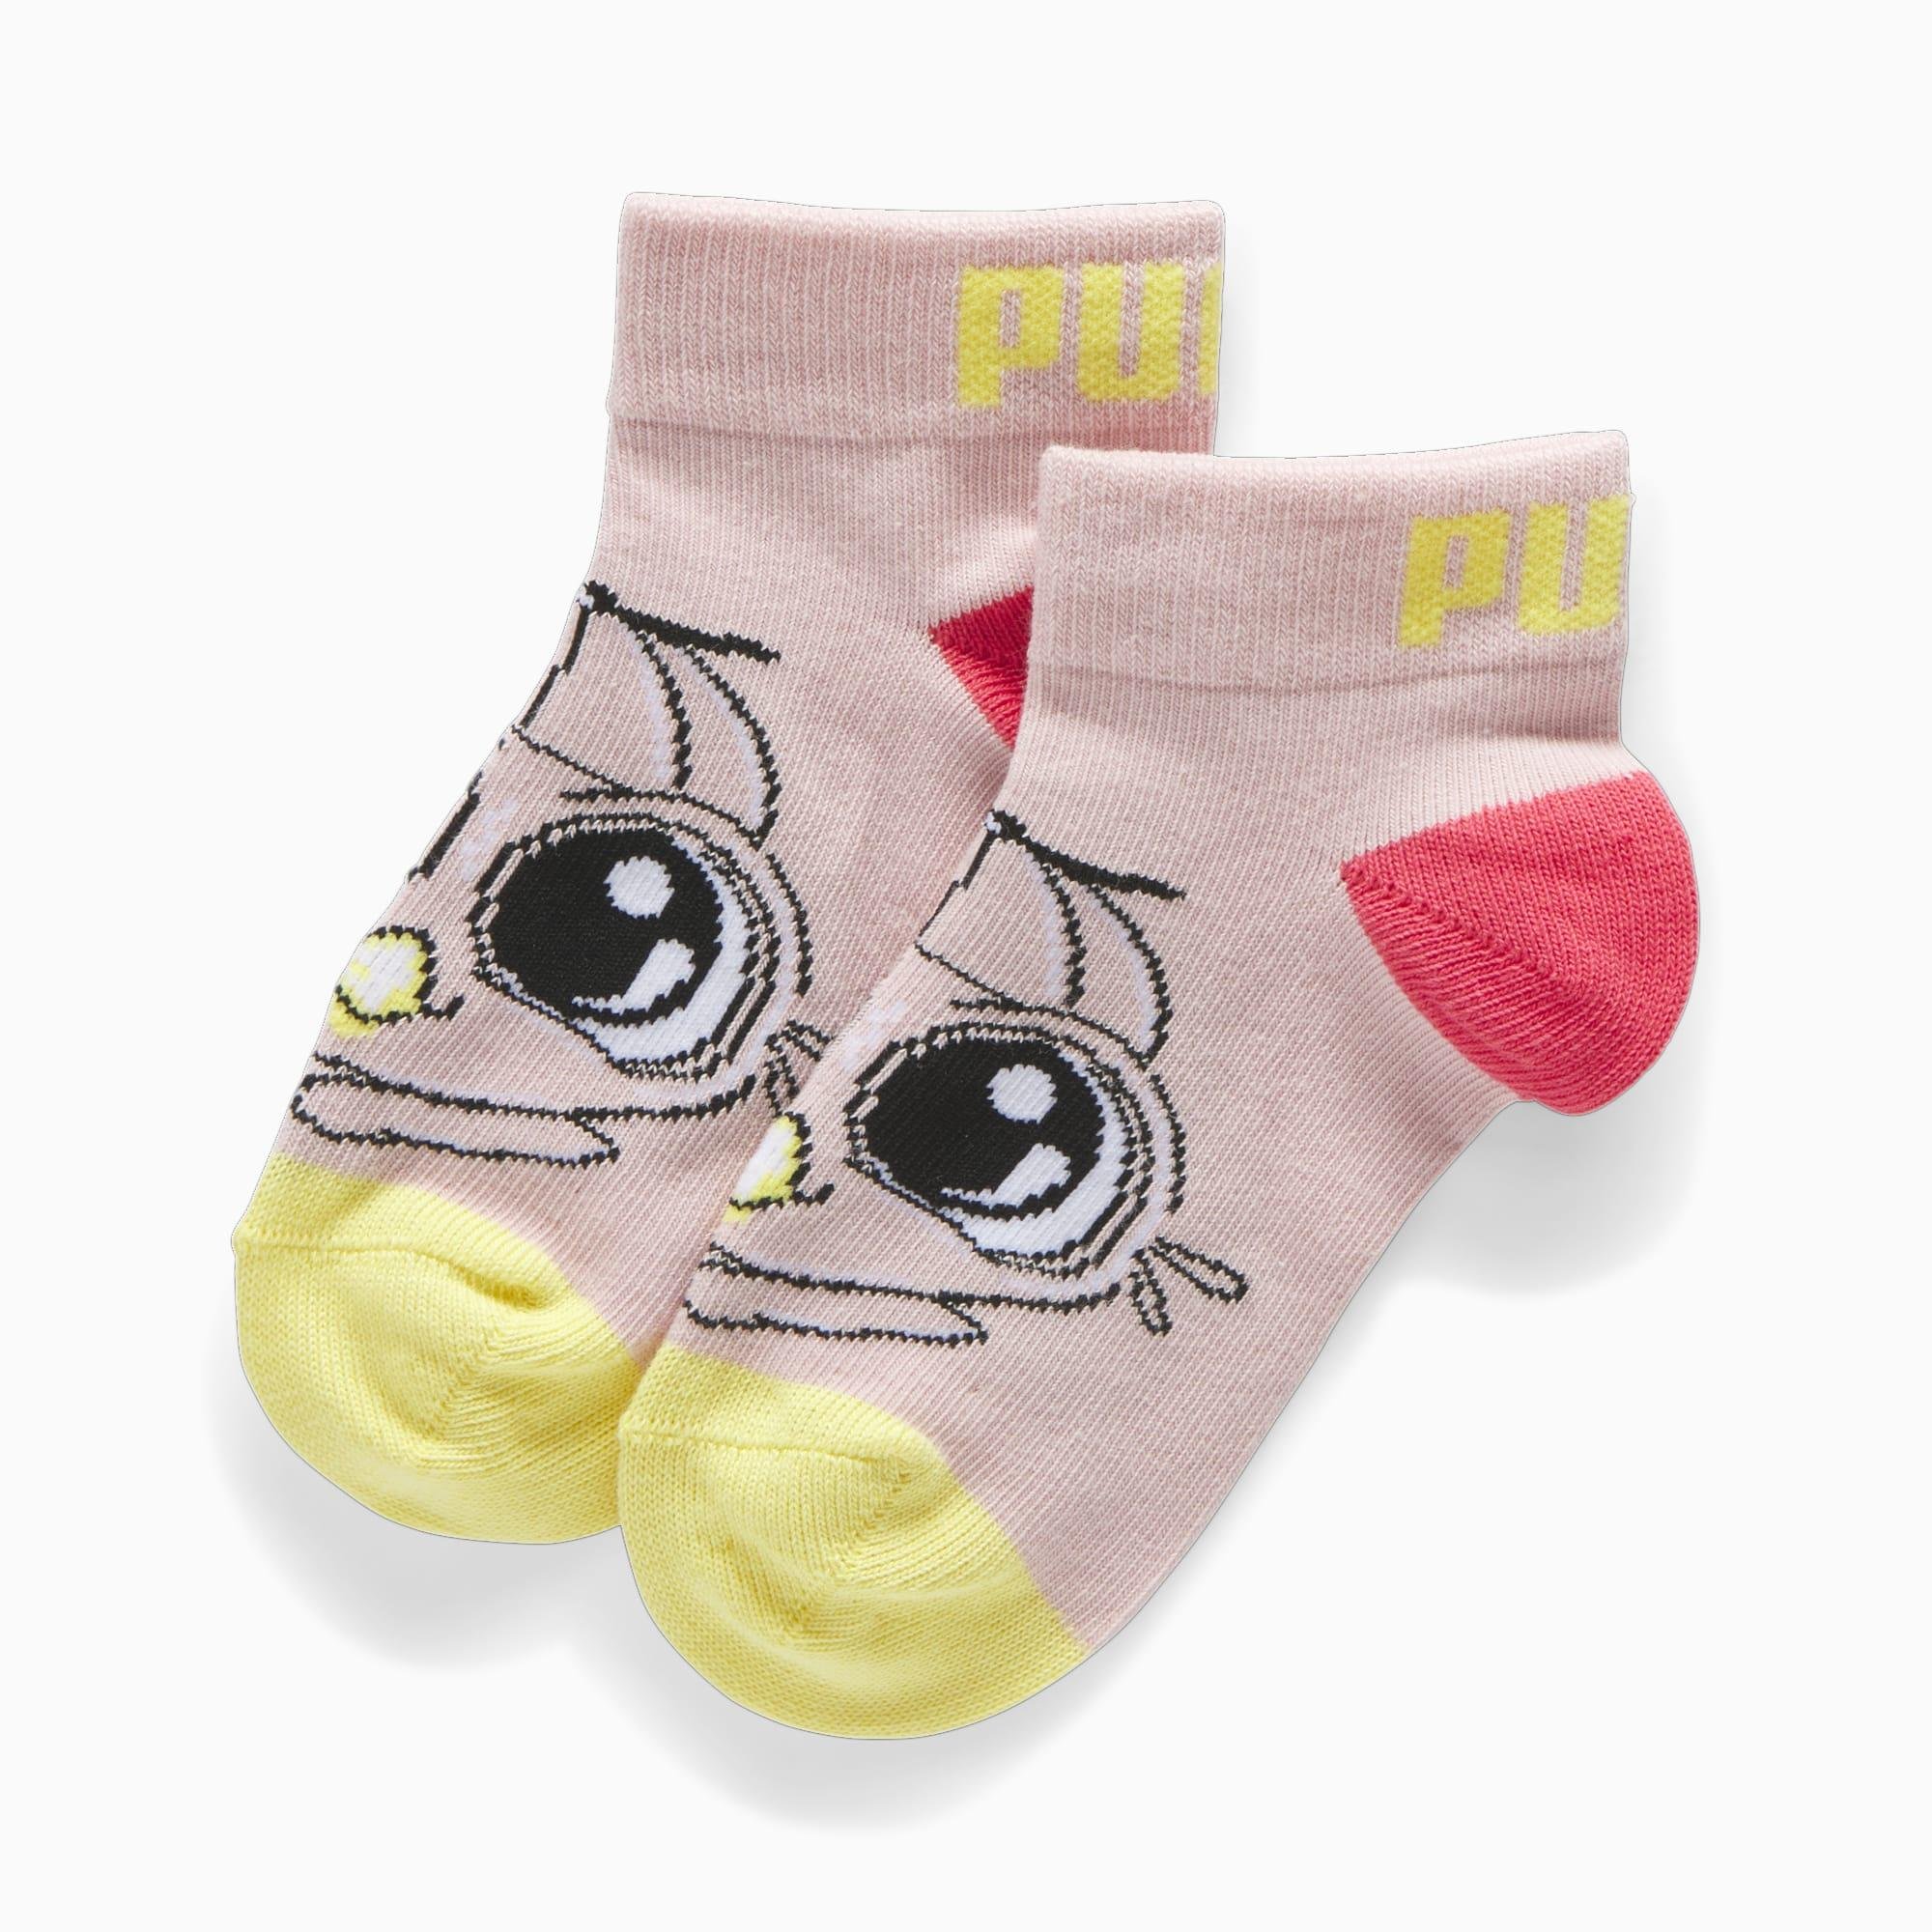 Big Kids' Unisex Socks (1 Pair) by PUMA